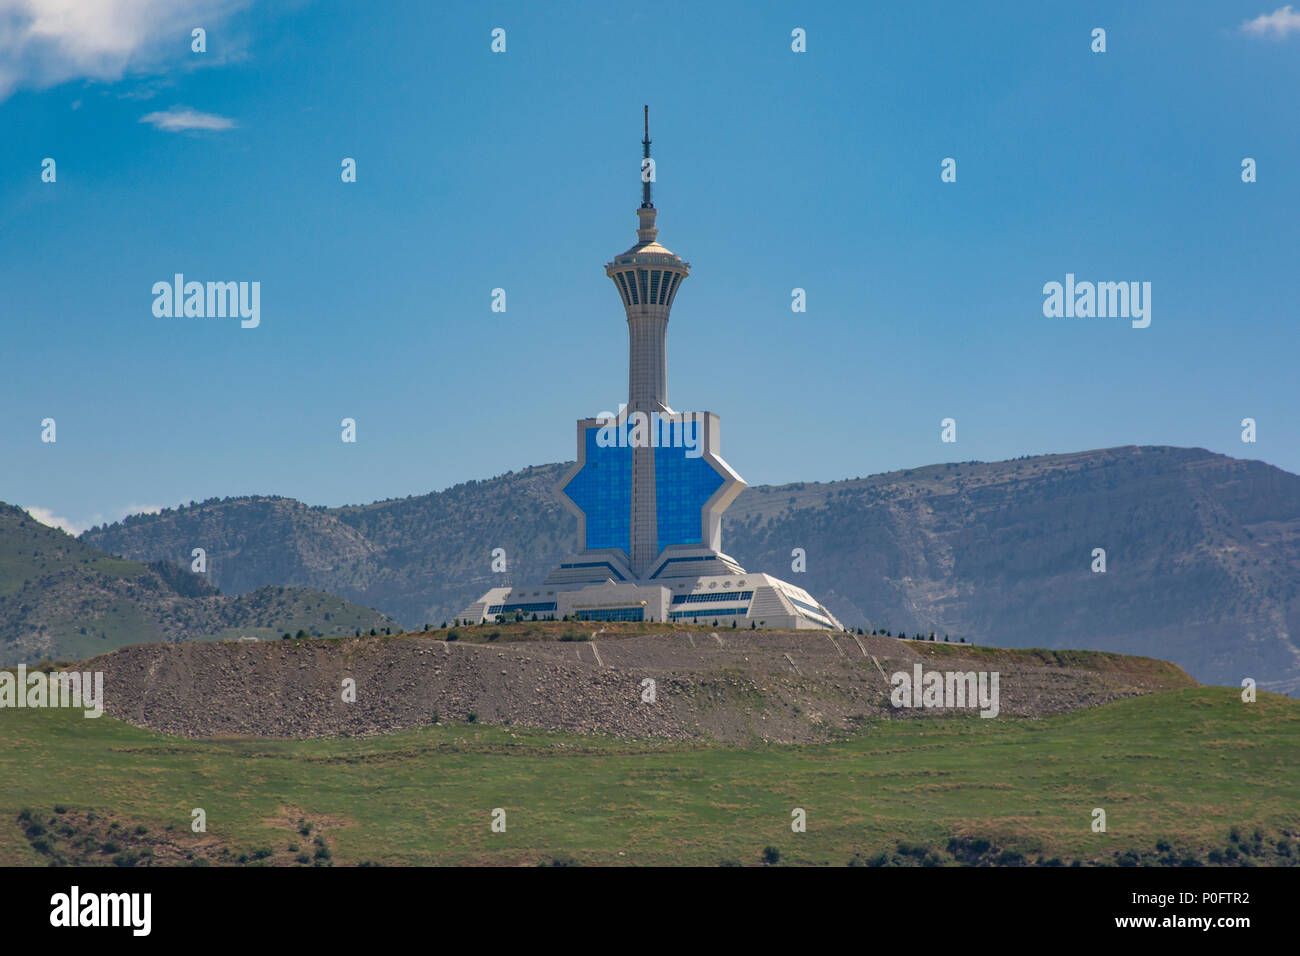 La torre della TV, Aşgabat, Turkmenistan Foto Stock